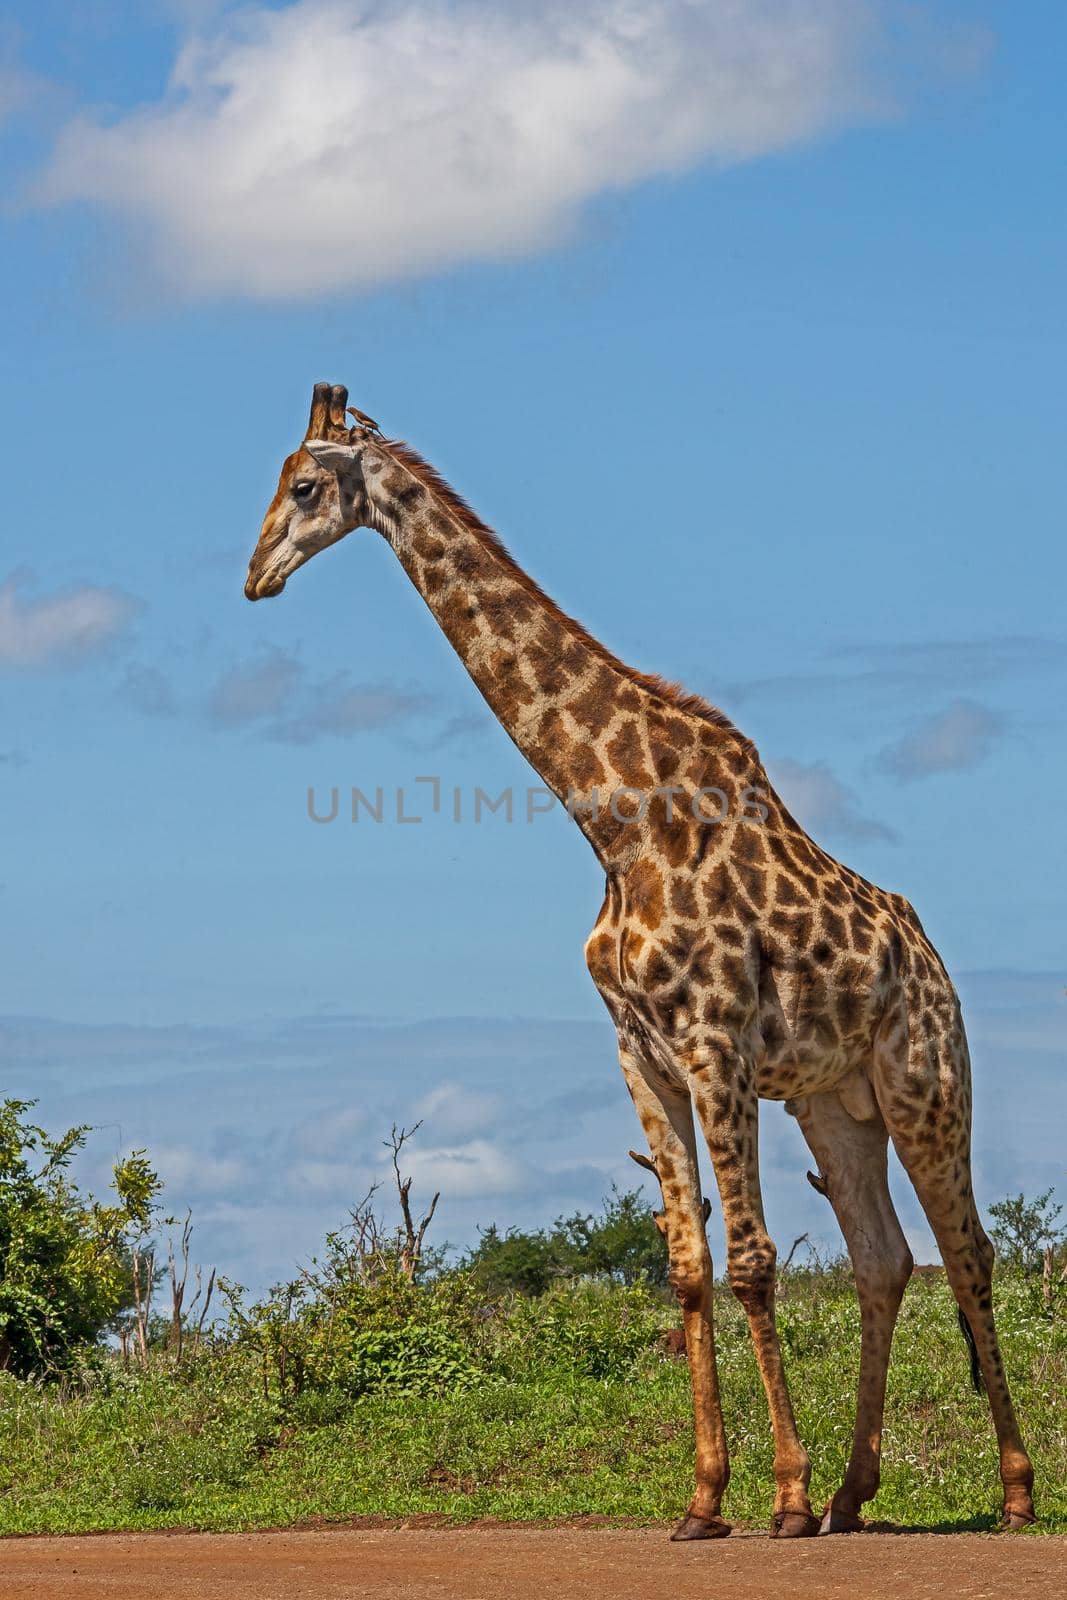 Giraffe (Giraffa camelopardalis) 15264 by kobus_peche